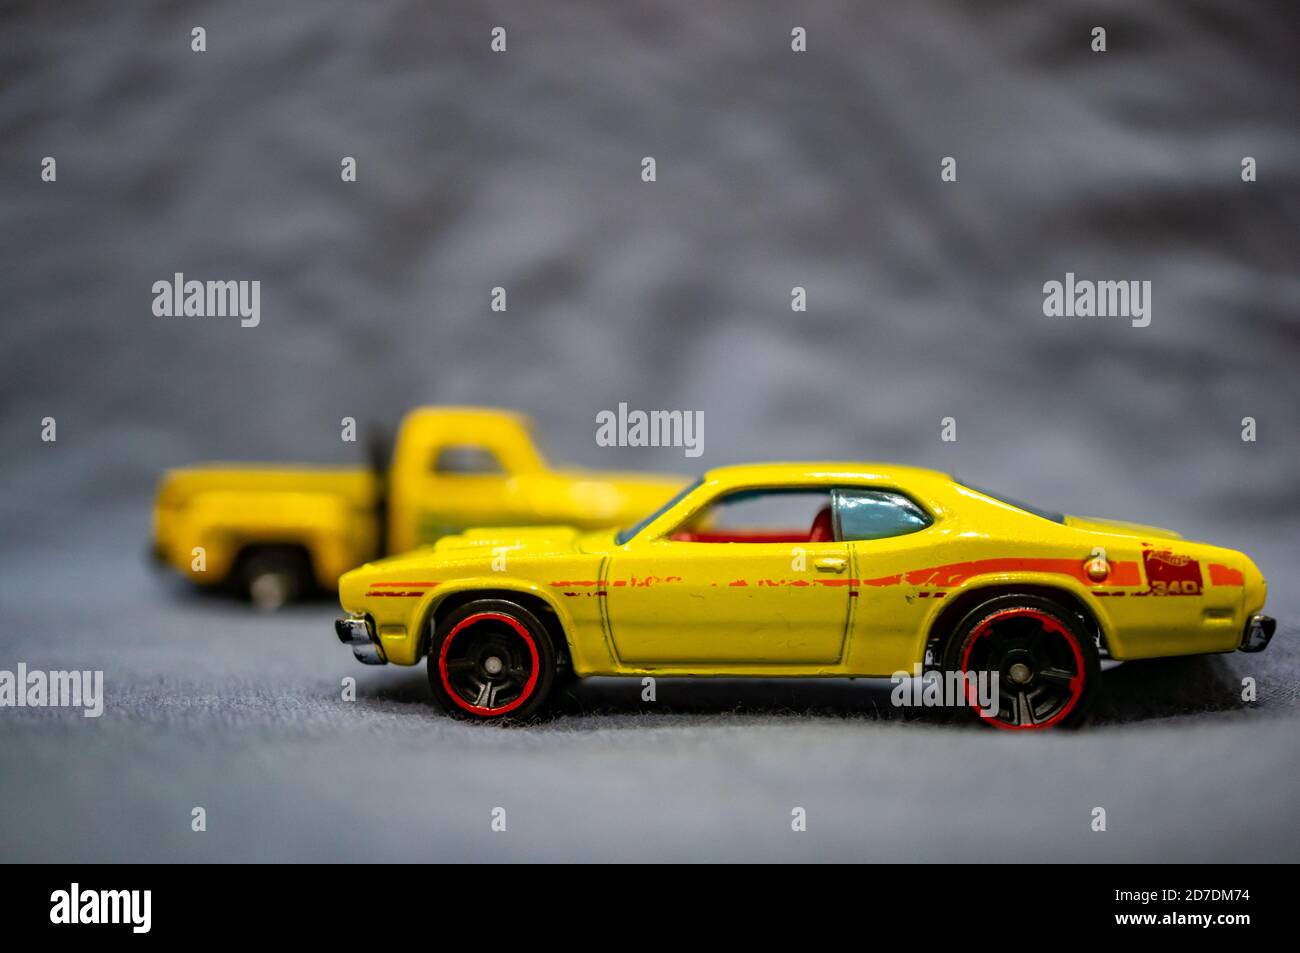 POZNAN, POLAND - Oct 20, 2020: Mattel Hot Wheels yellow classic Chrysler Dodge Demon toy model car. Stock Photo